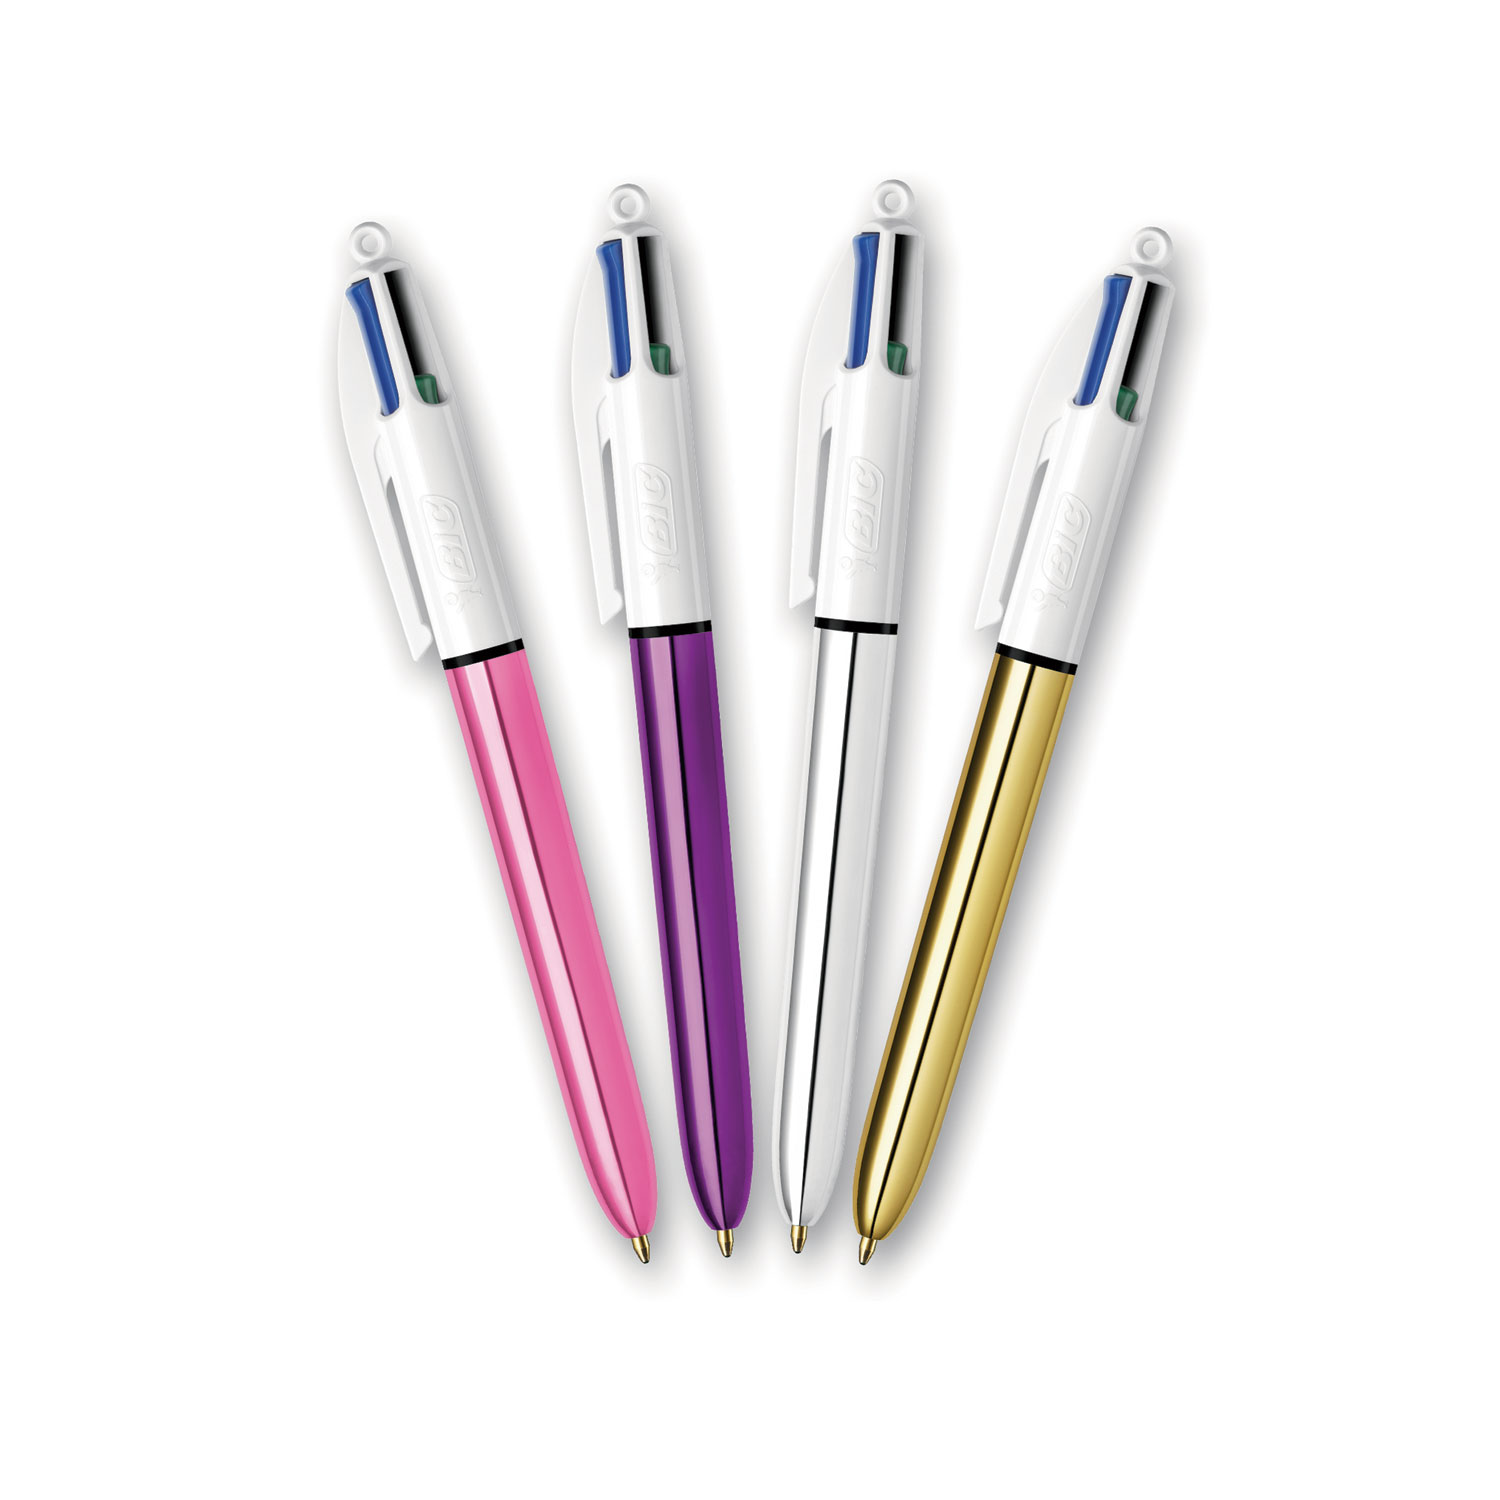 4-Color Multi-Function Ballpoint Pen, Retractable, Medium 1 mm,  Black/Blue/Green/Red Ink, Randomly Assorted Barrel Colors